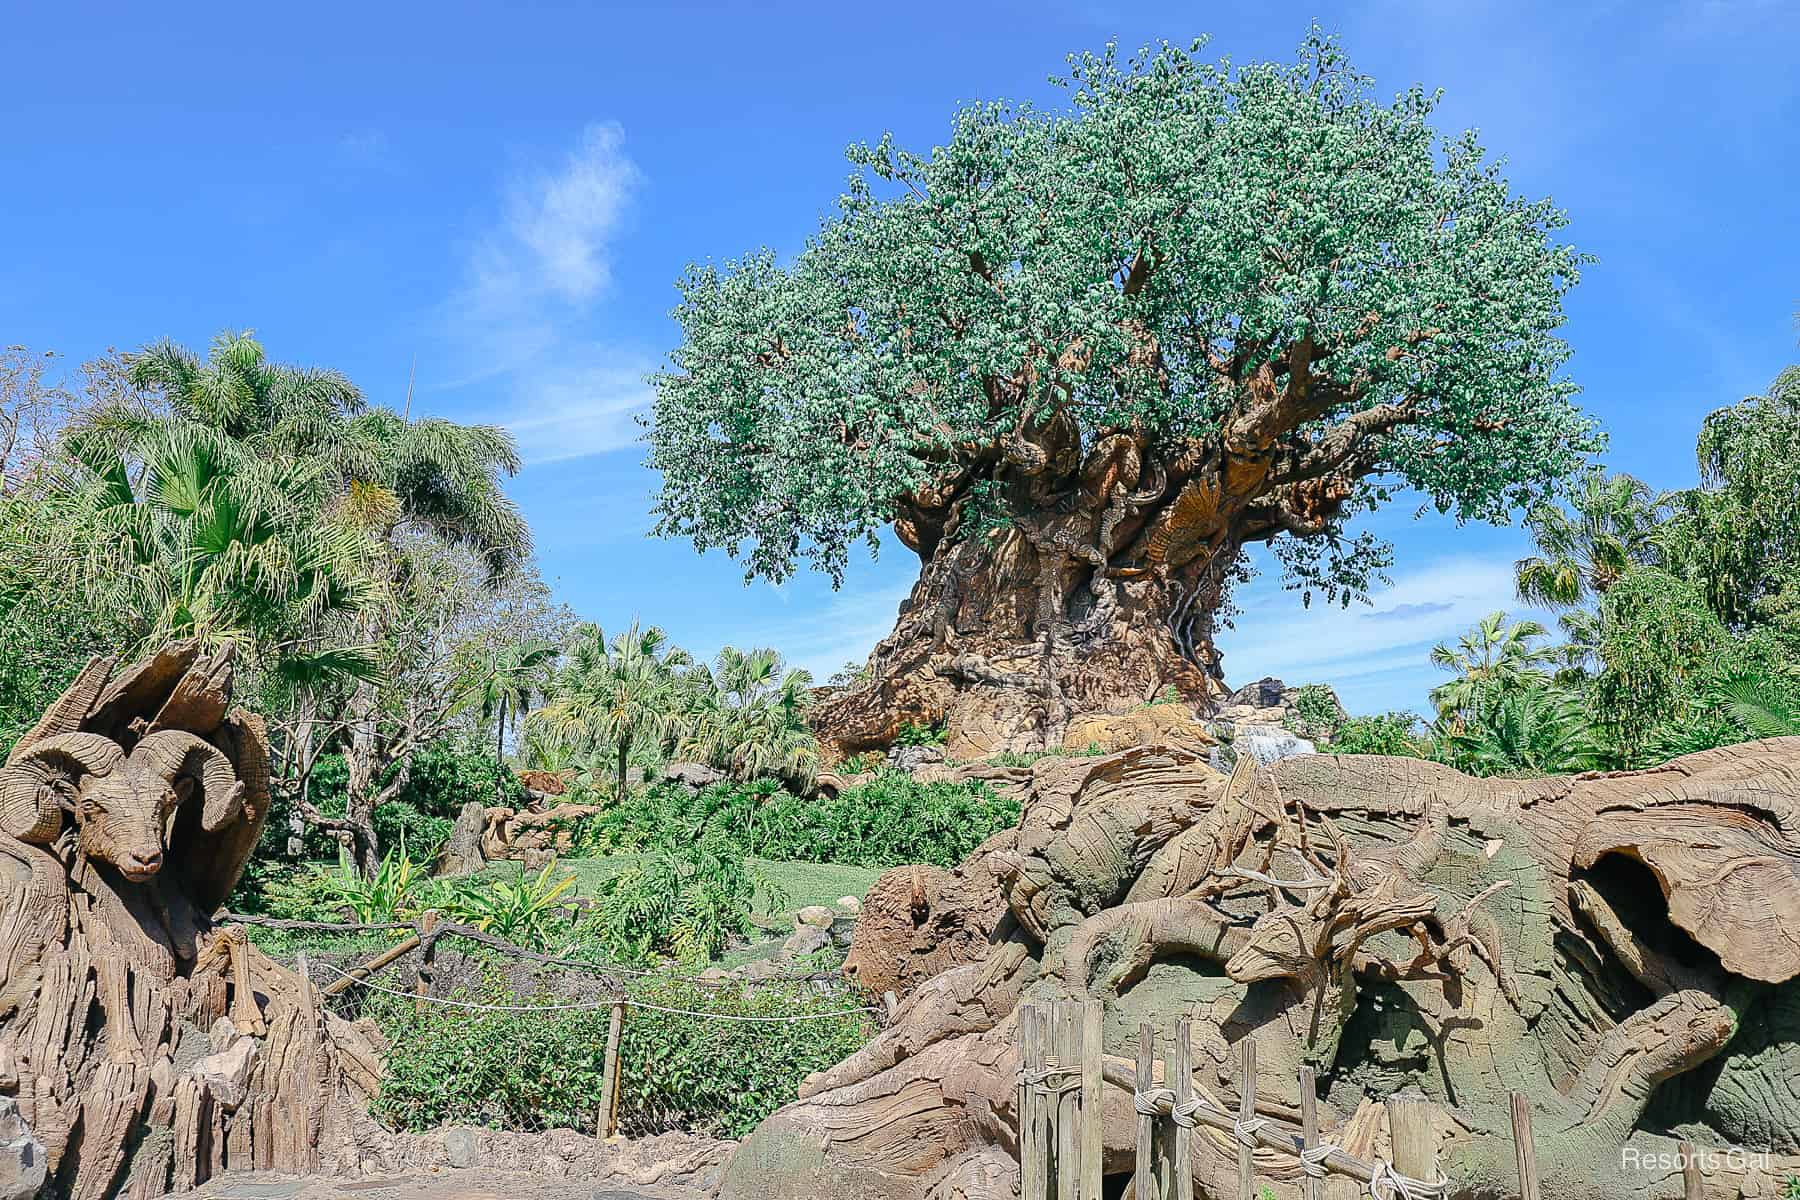 The Discovery Island Trails at Disney's Animal Kingdom